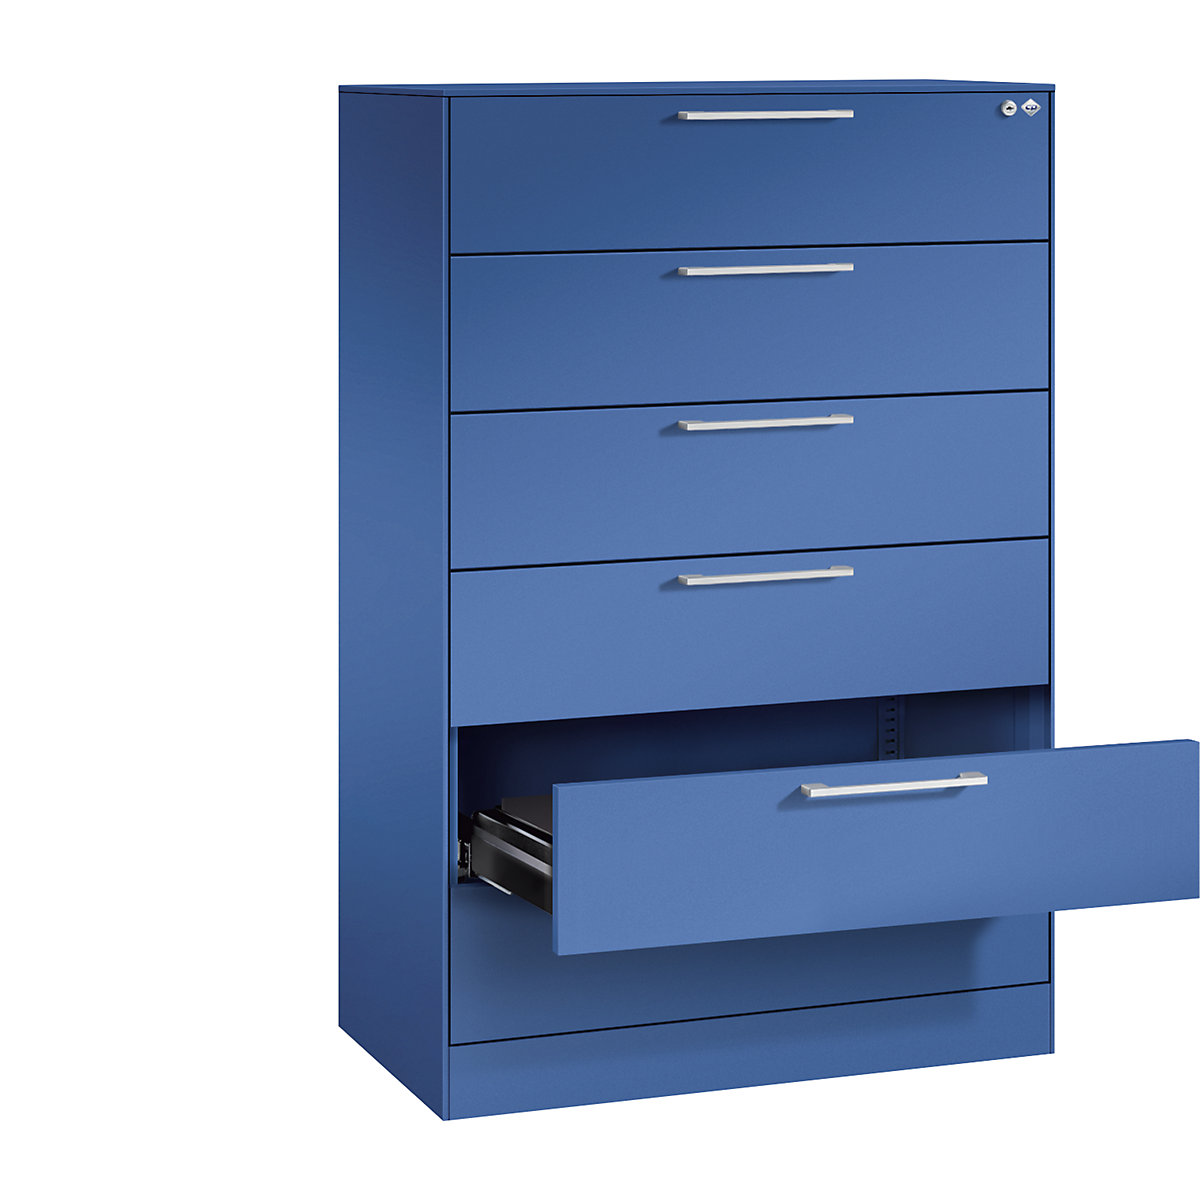 C+P – Kartotéková skříň ASISTO, výška 1292 mm, se 6 výsuvy, DIN A5 na šířku, enciánová modrá/enciánová modrá